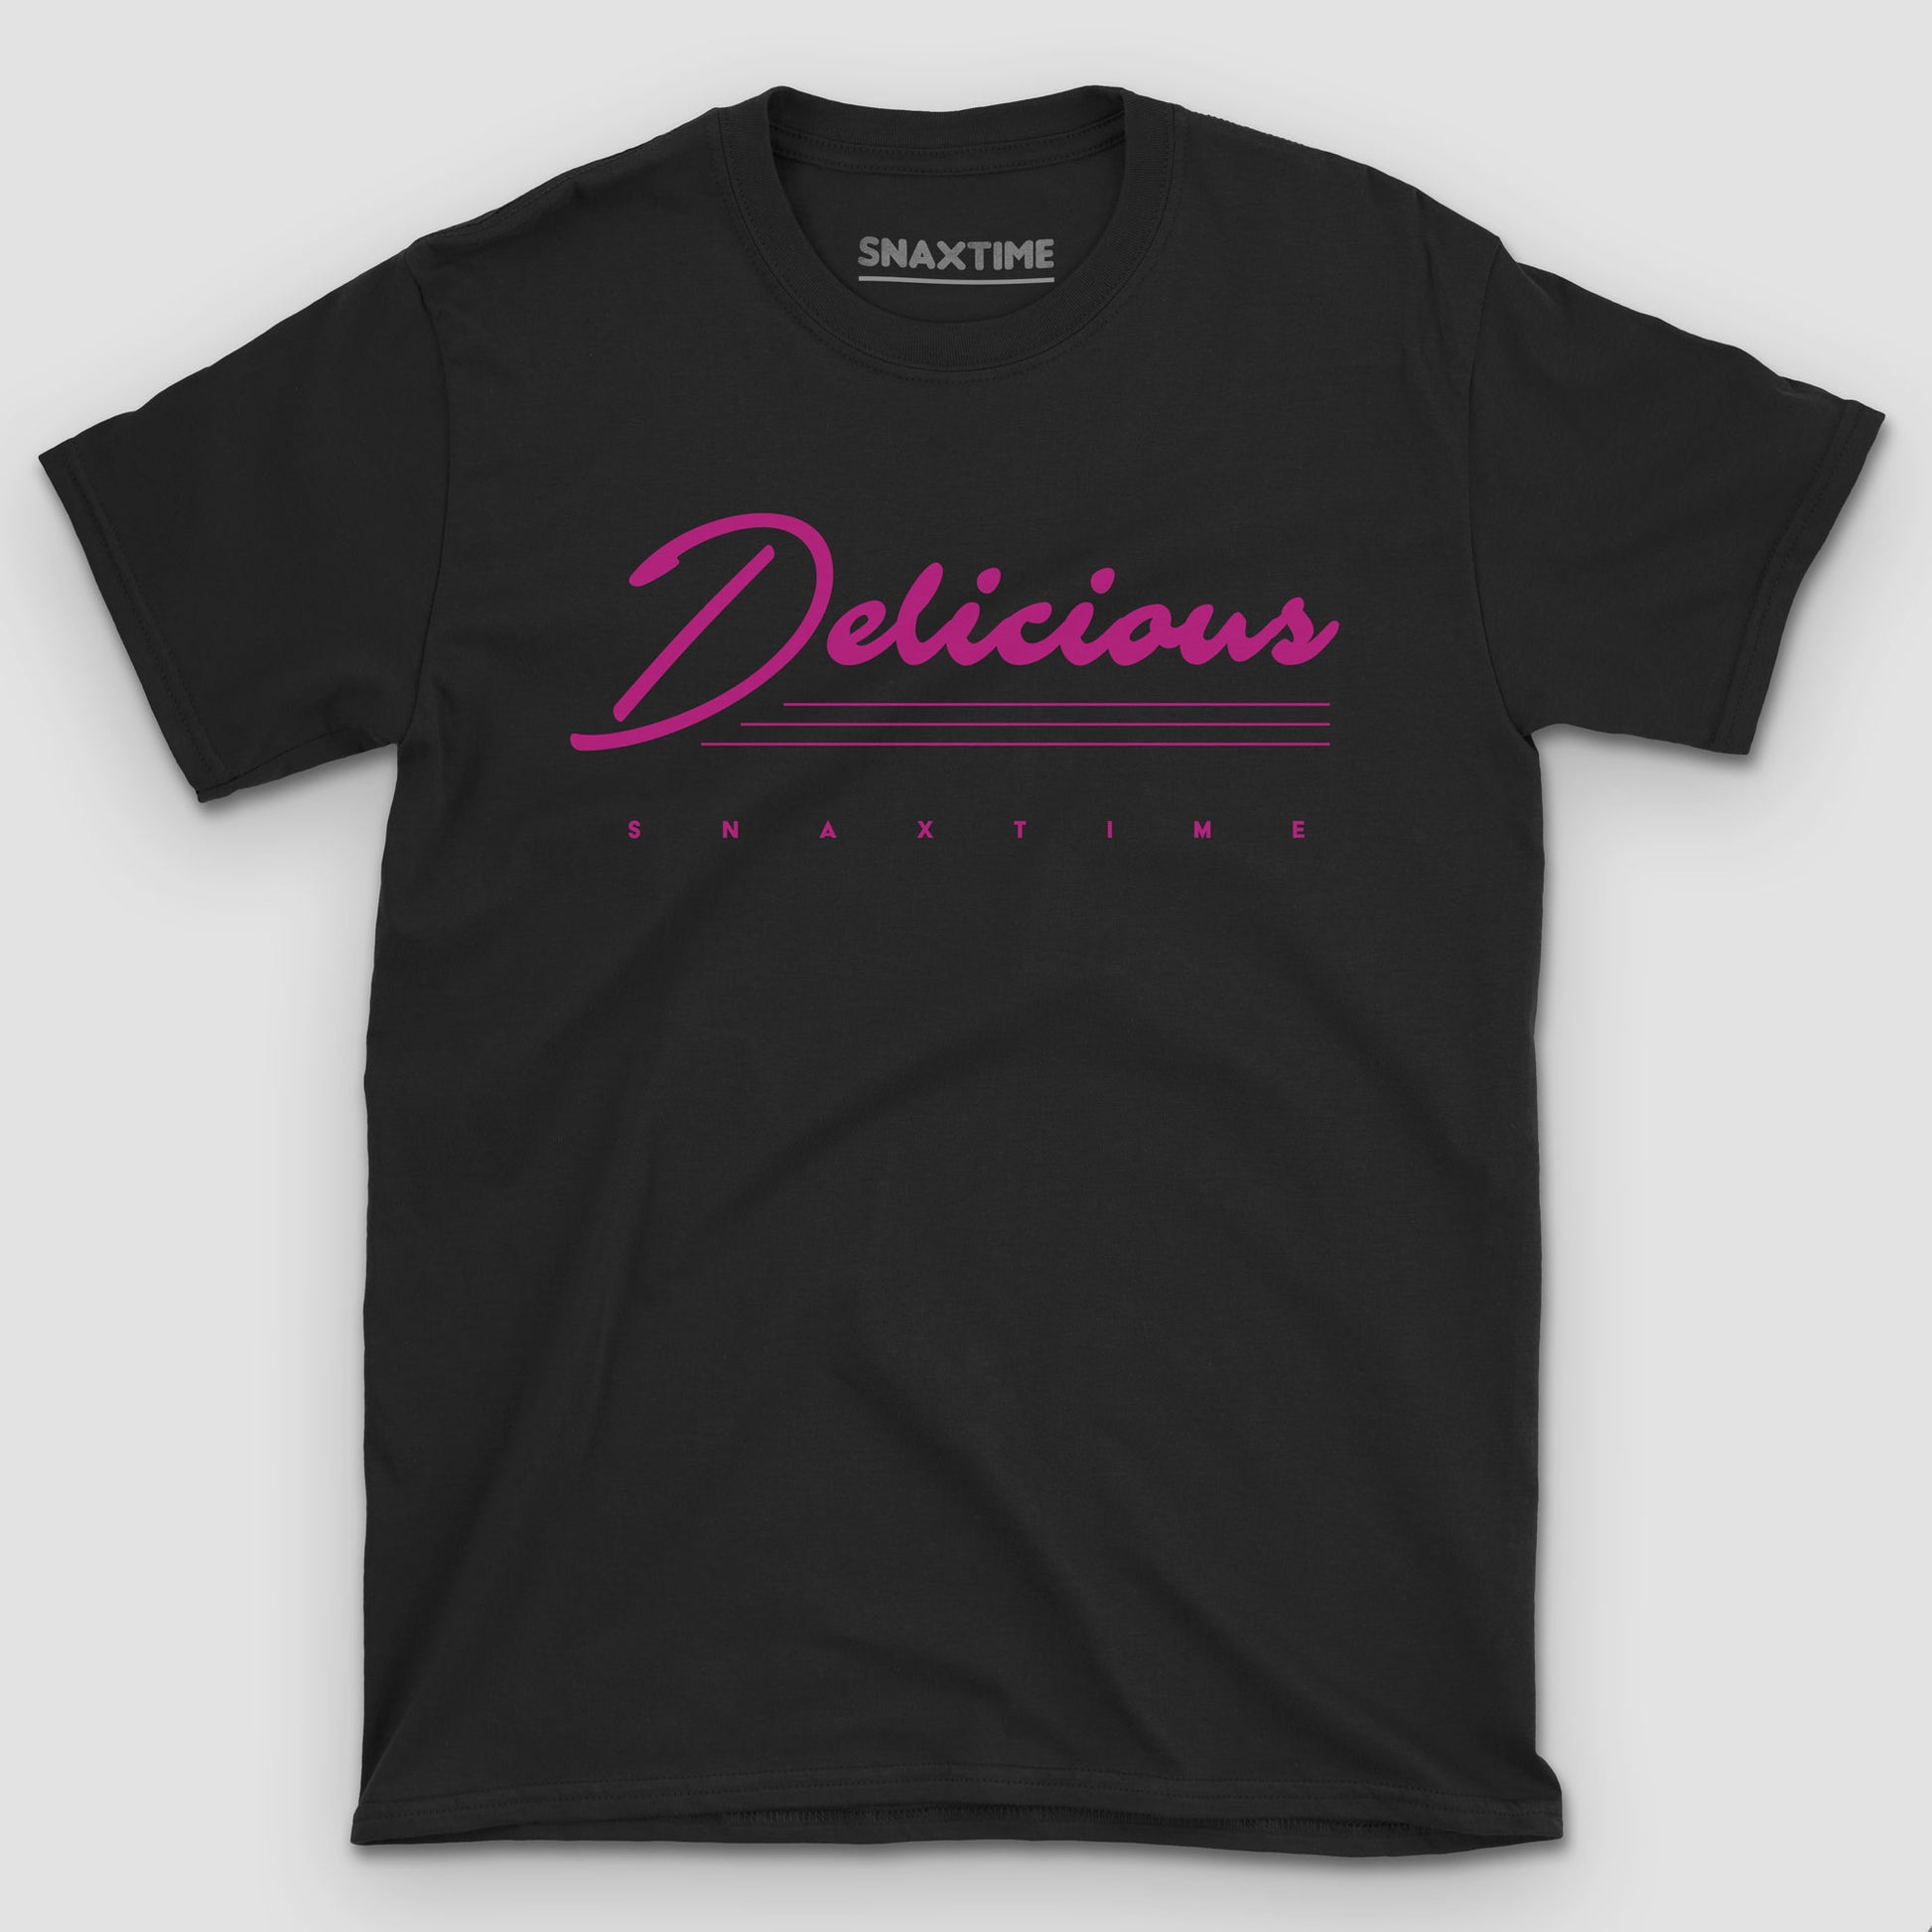 "Delicious" 80s Retrowave Graphic T-Shirt - Snaxtime